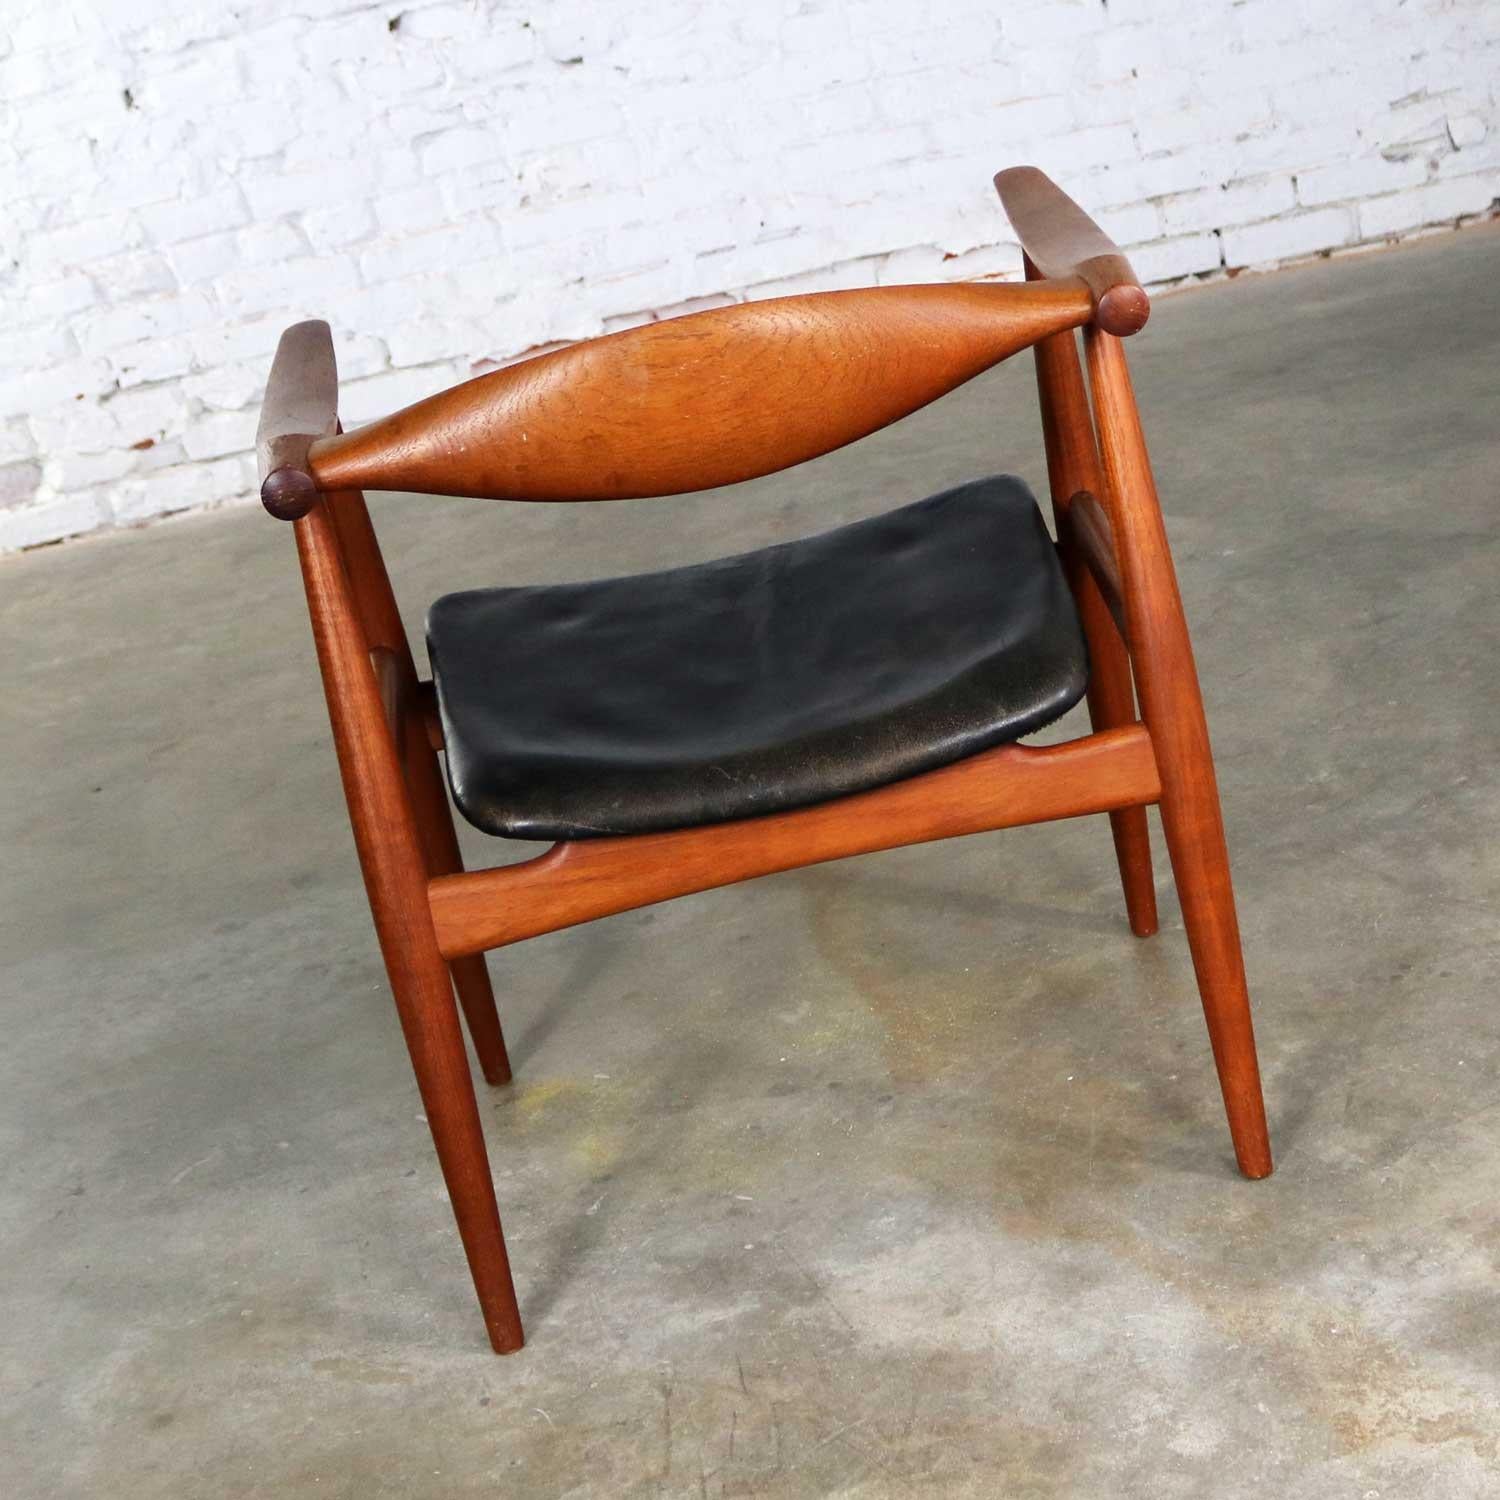 20th Century Hans Wegner Teak CH 35 Chair for Carl Hansen & Son Vintage Scandinavian Modern